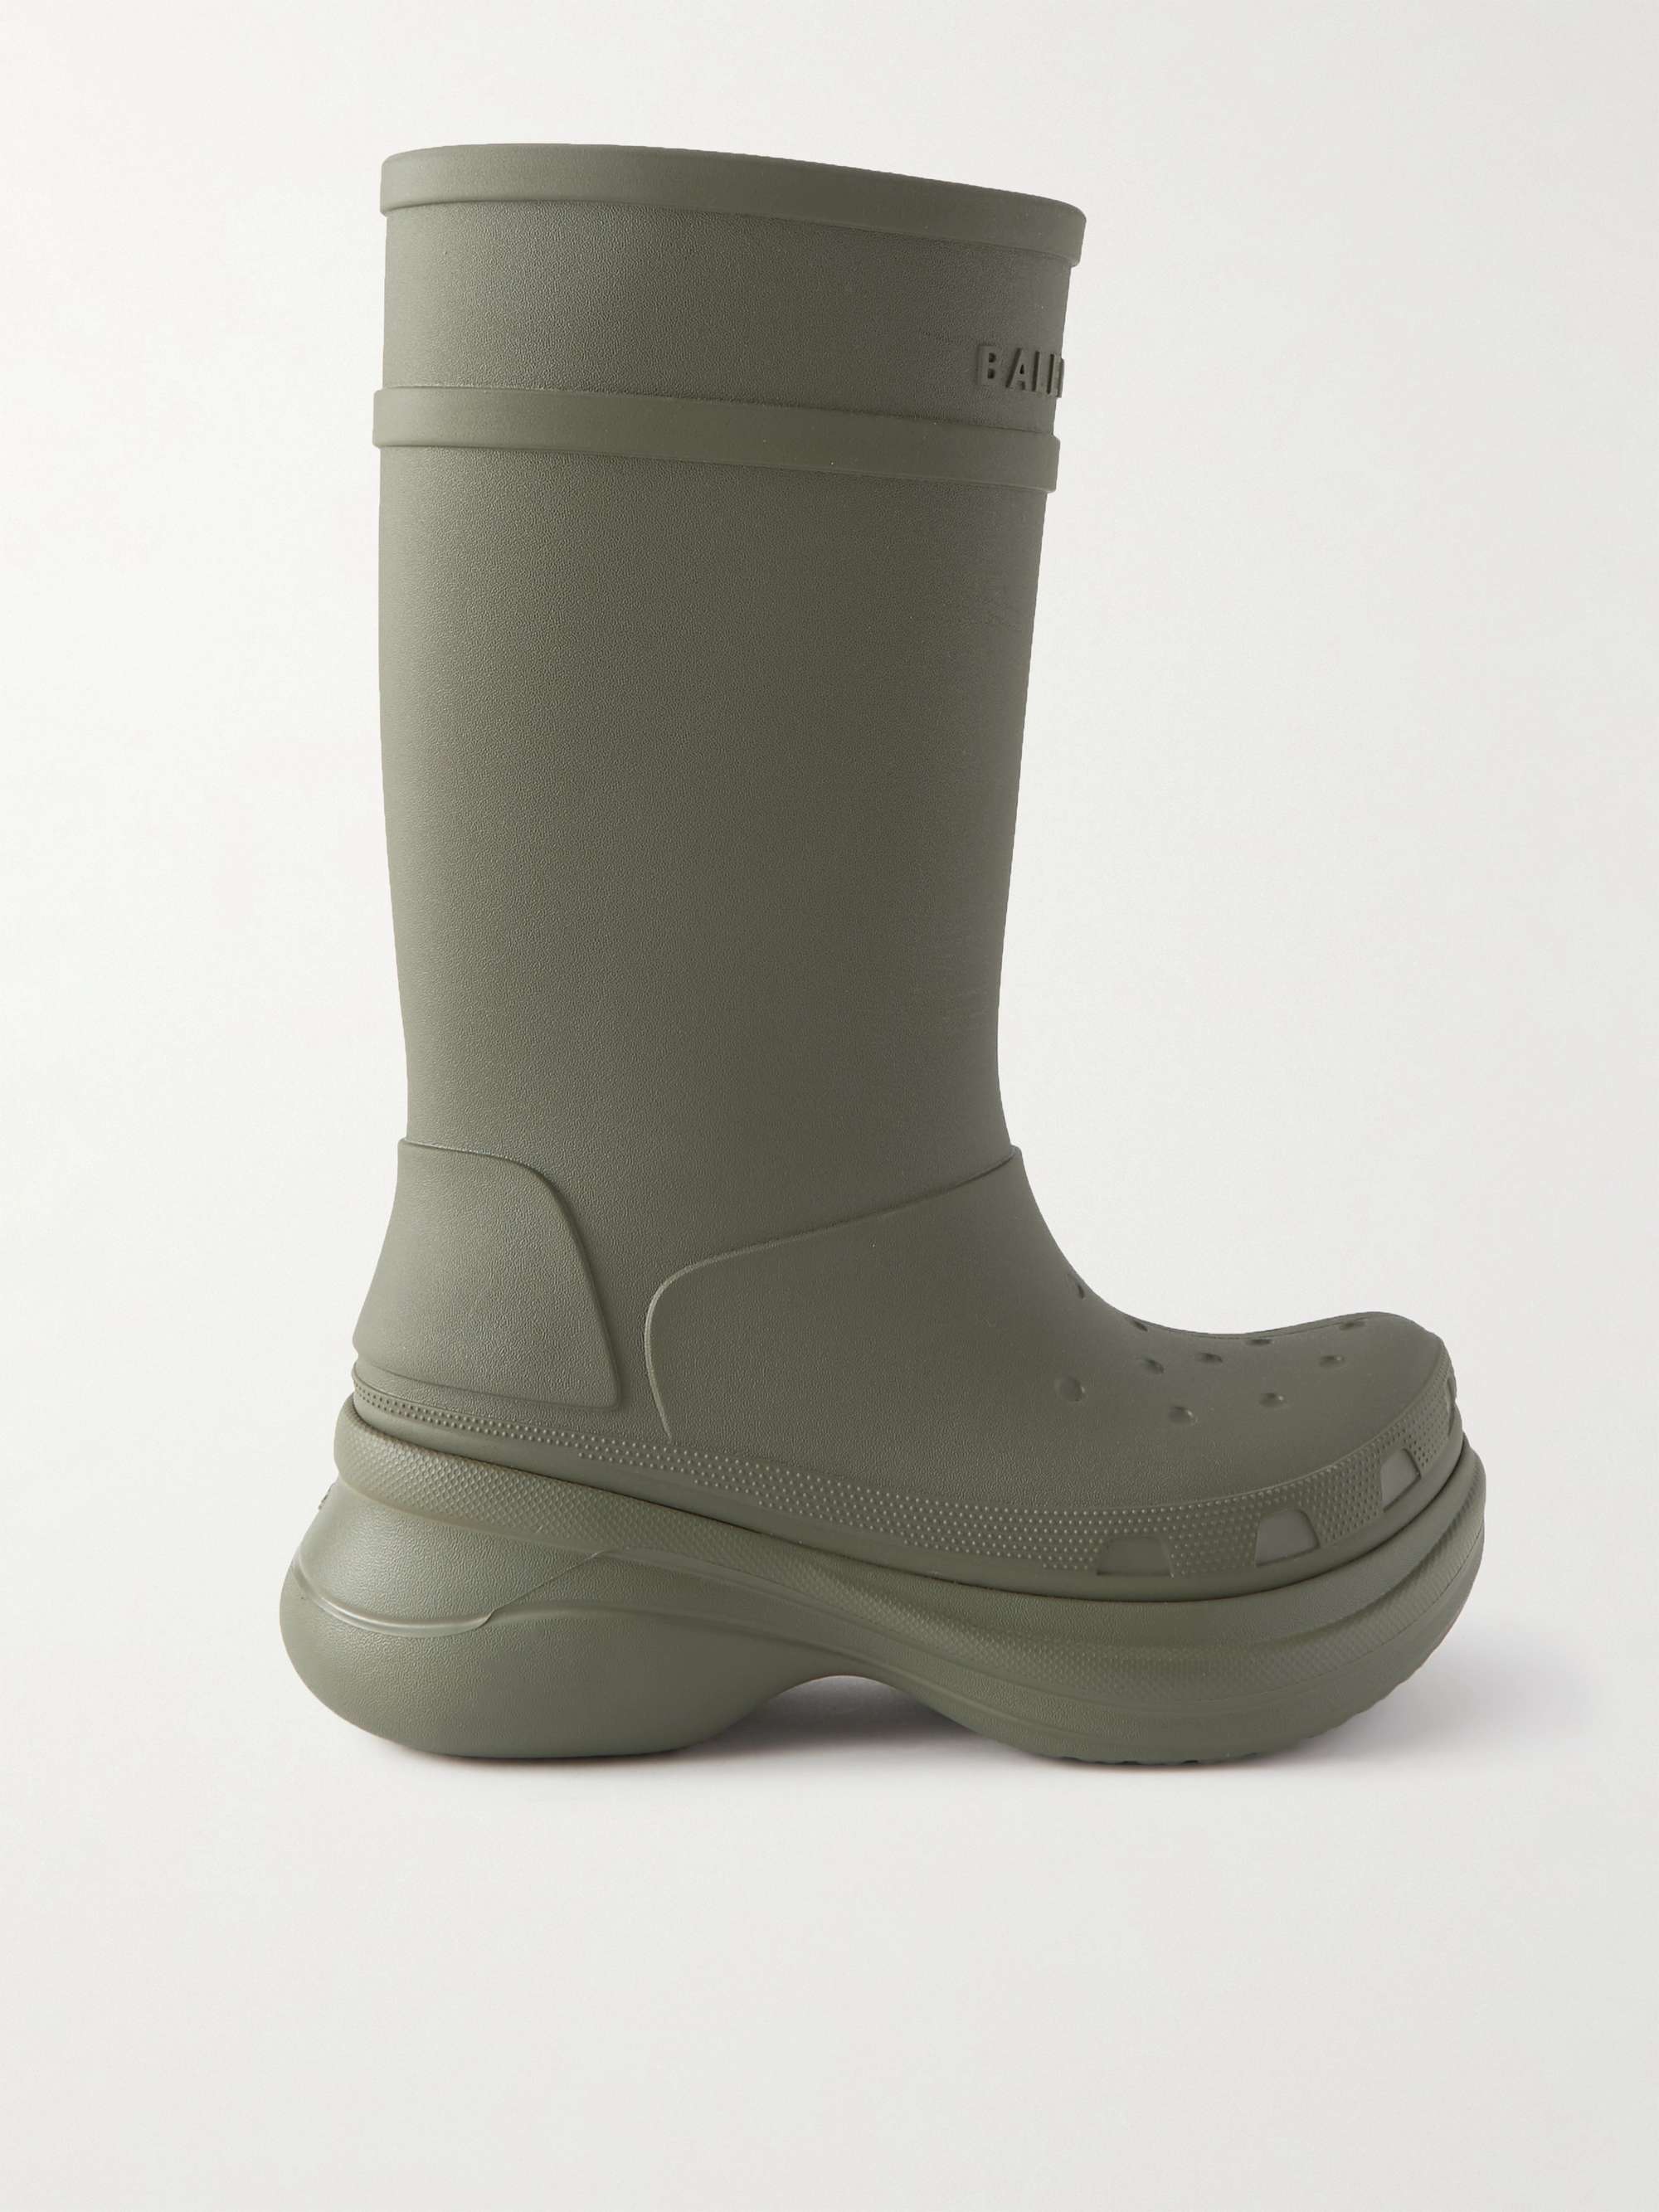 BALENCIAGA + Crocs Rubber Boots | MR PORTER